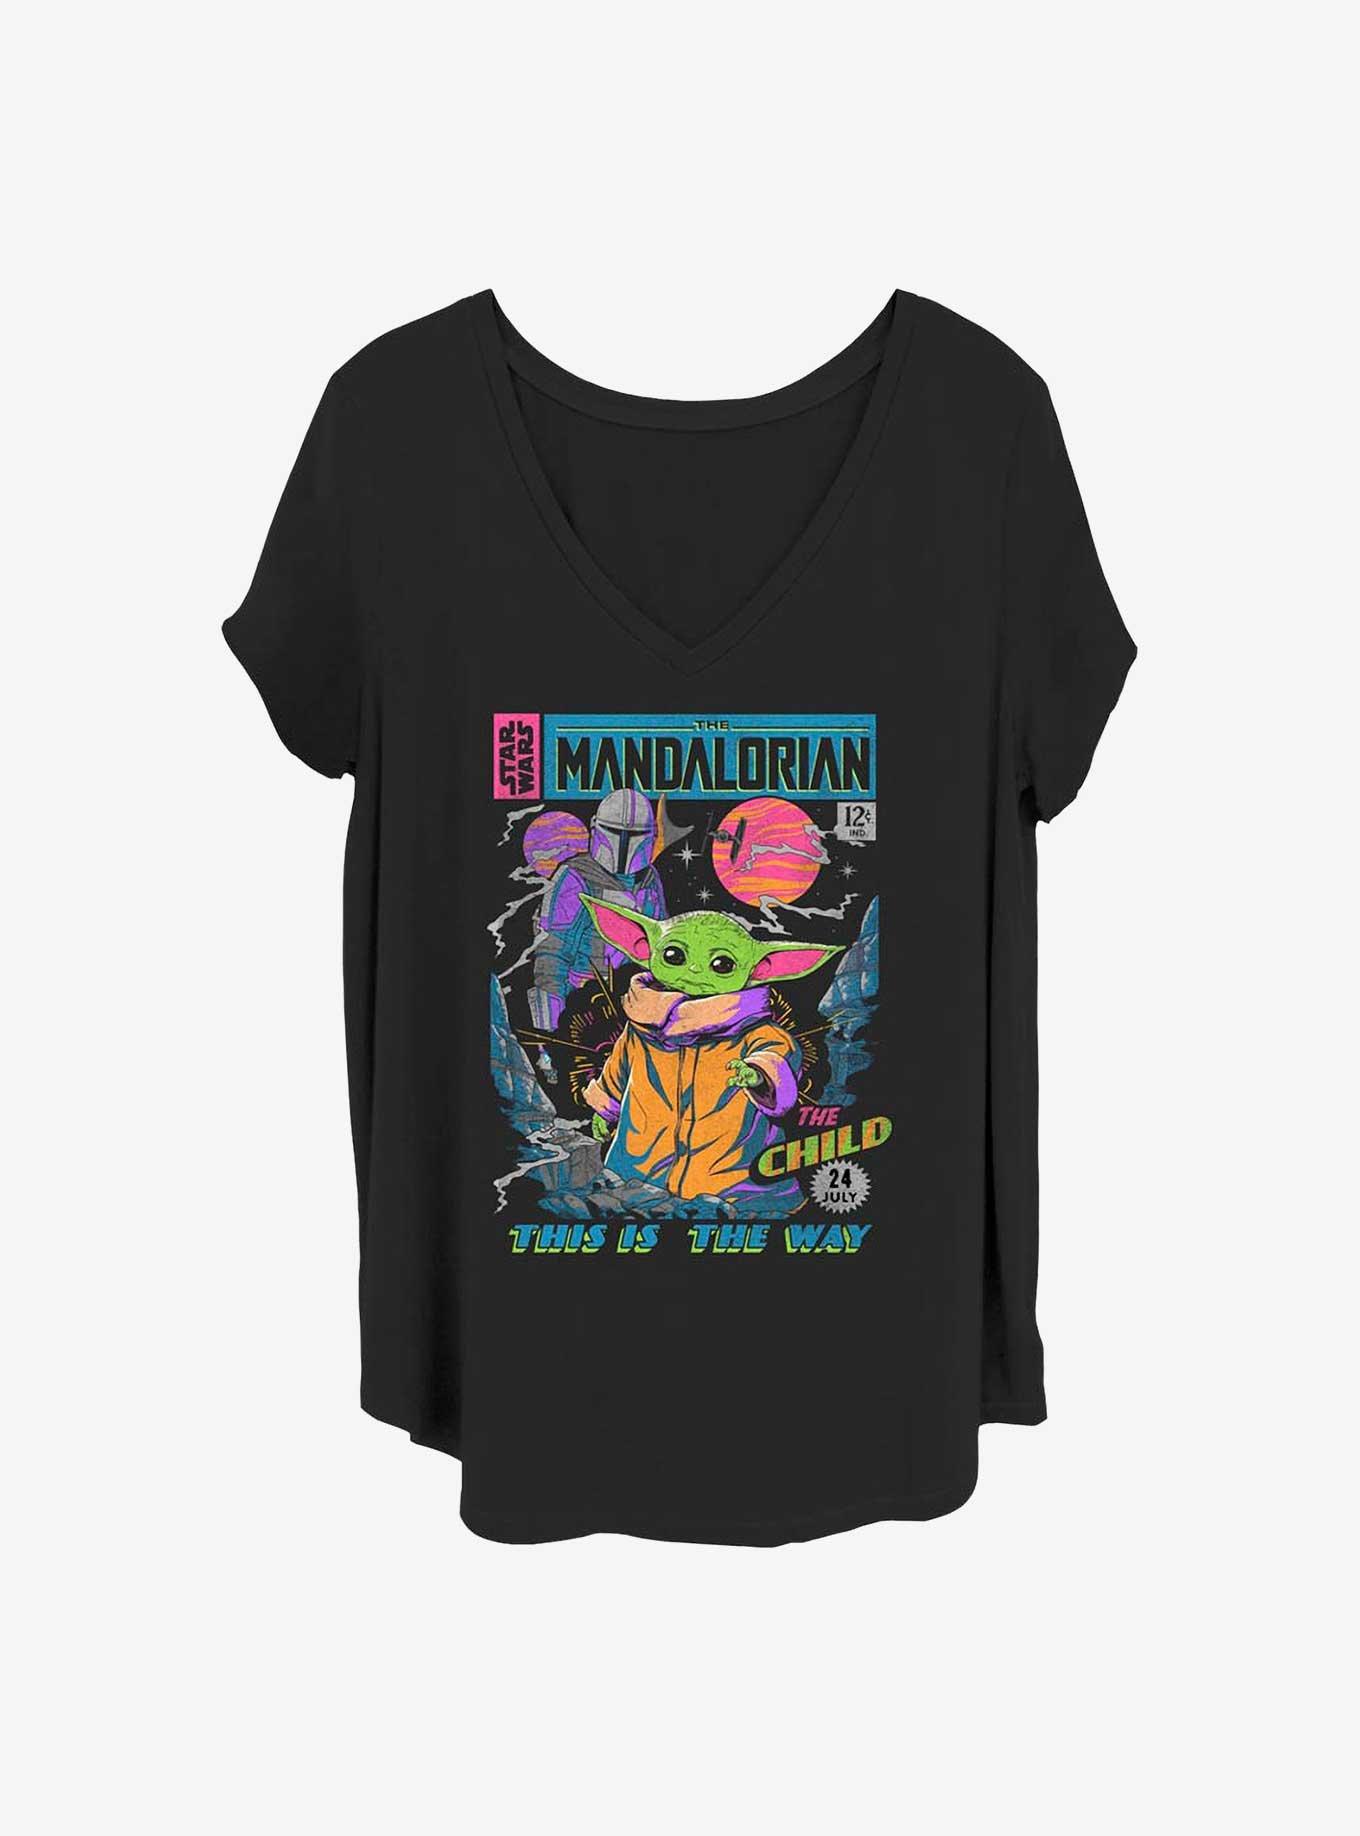 Star Wars The Mandalorian Neon Poster Girls T-Shirt Plus